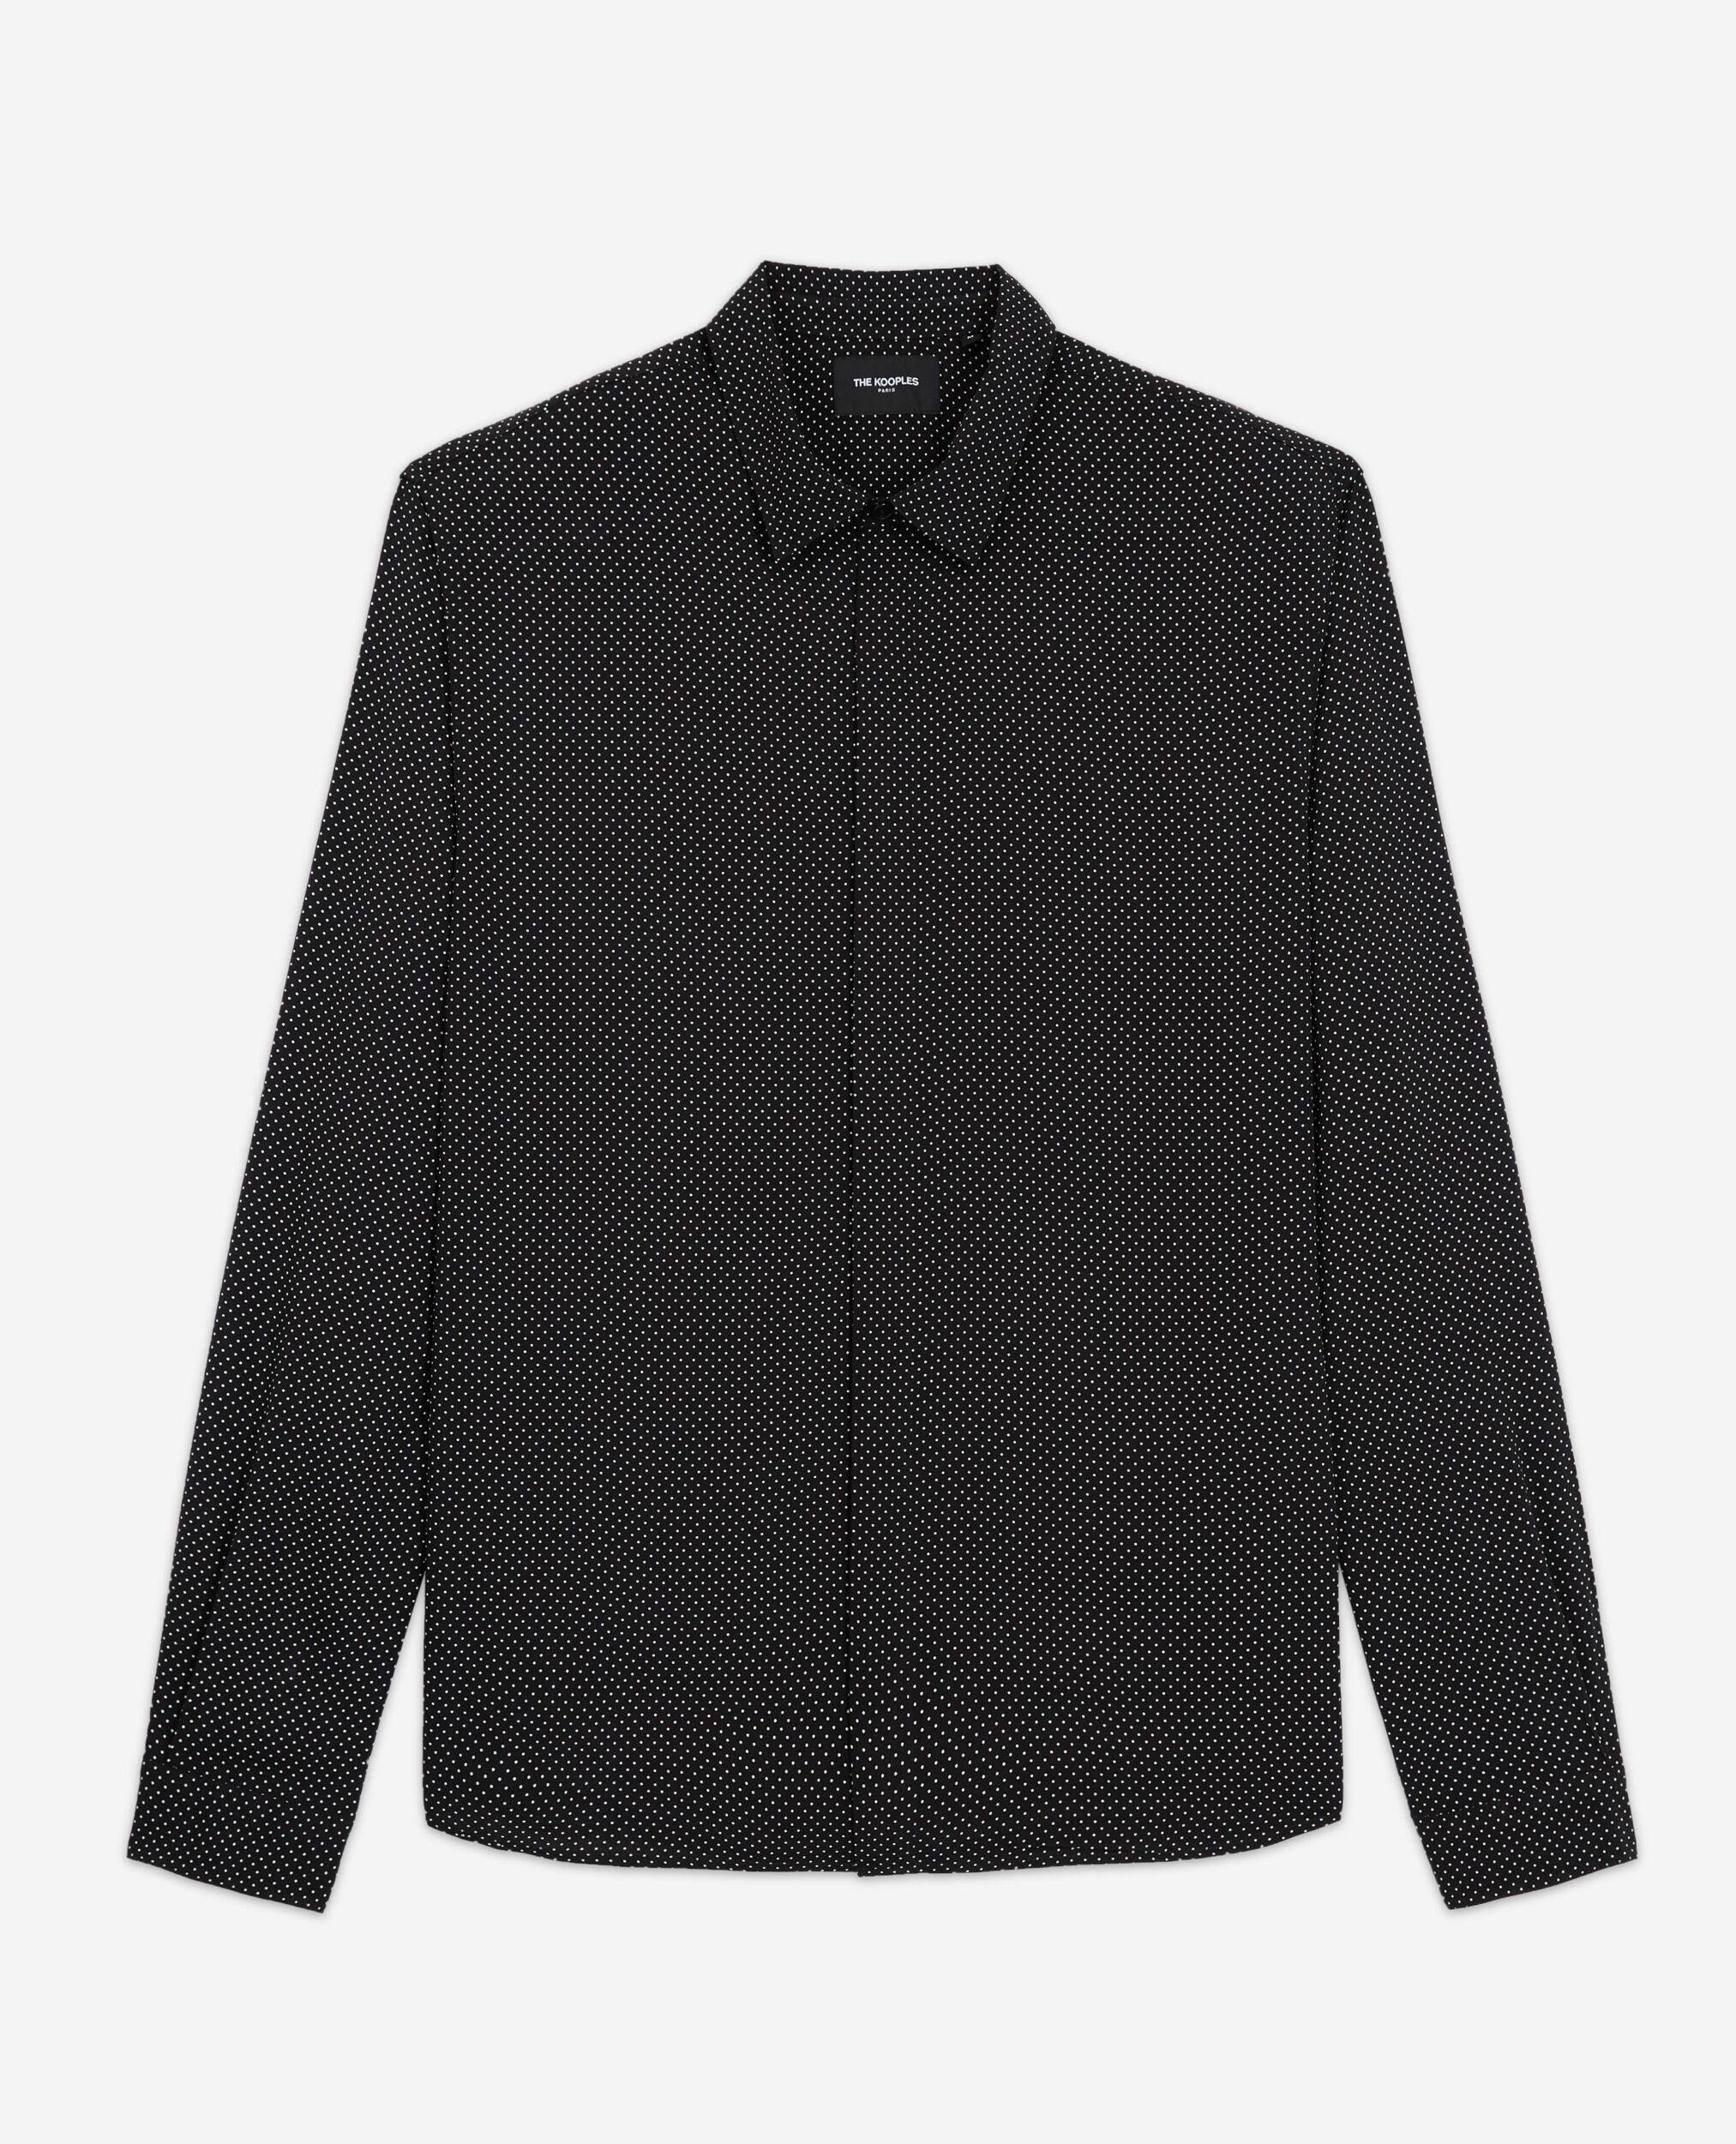 Schwarzes Herrenhemd mit Punkte-Motiv, BLACK WHITE, hi-res image number null